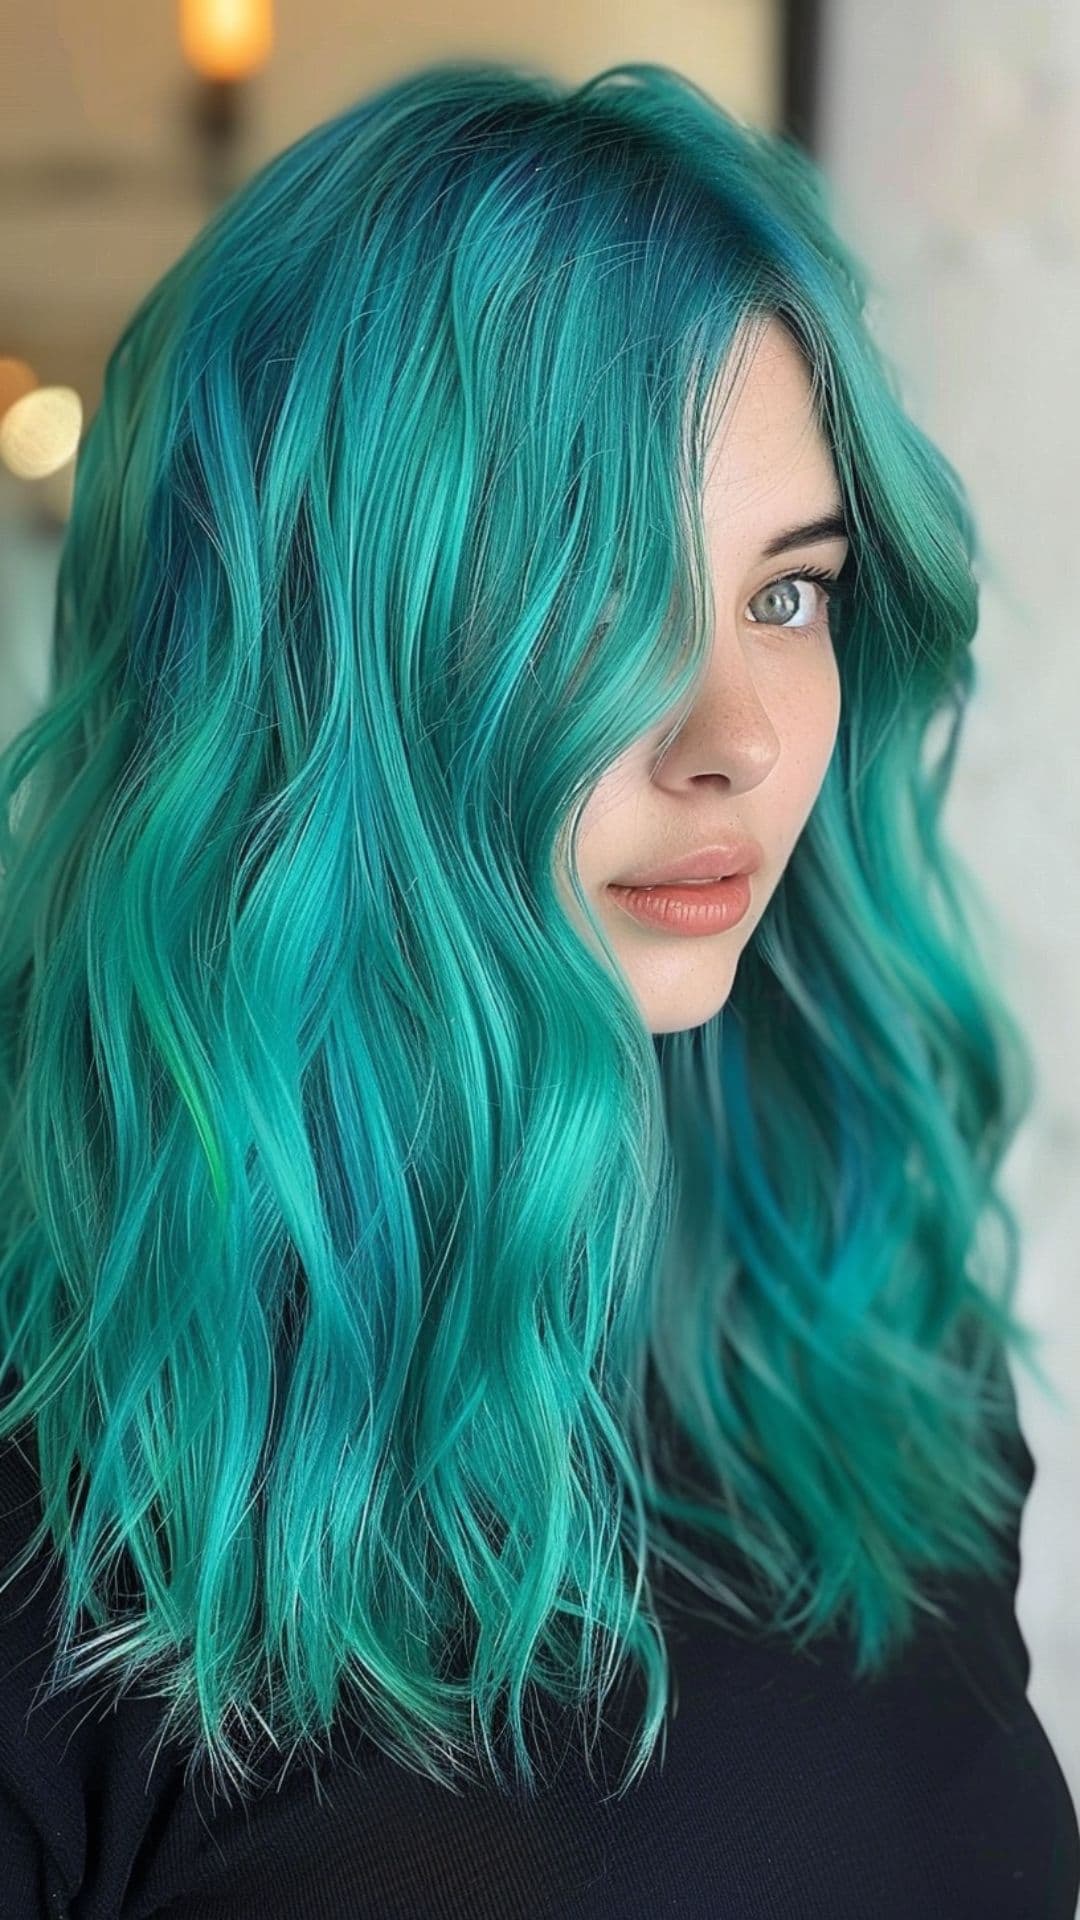 A woman modelling an aquamarine and green hair.